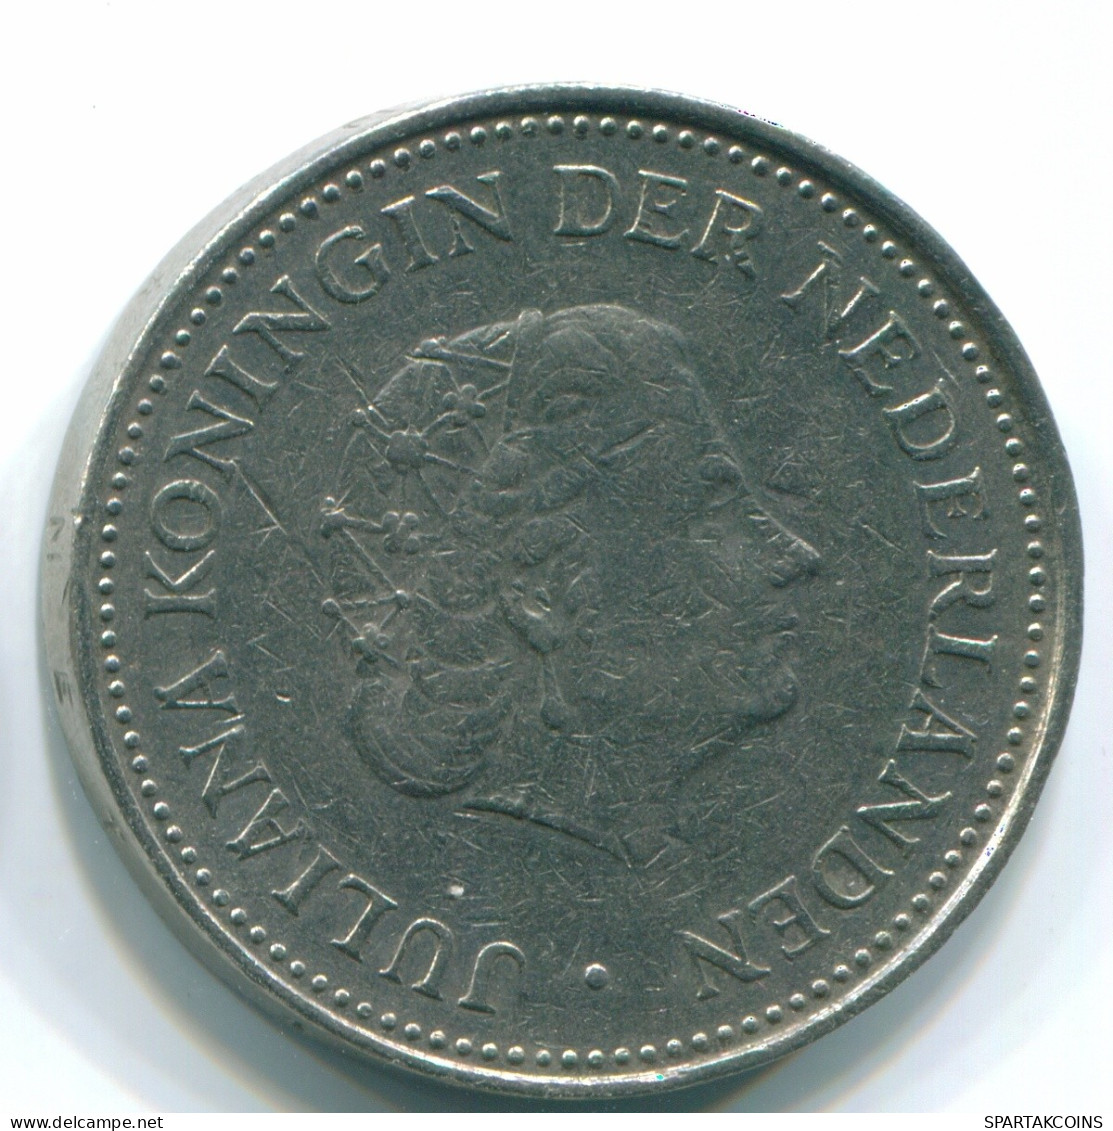 1 GULDEN 1971 NETHERLANDS ANTILLES Nickel Colonial Coin #S12016.U.A - Antille Olandesi